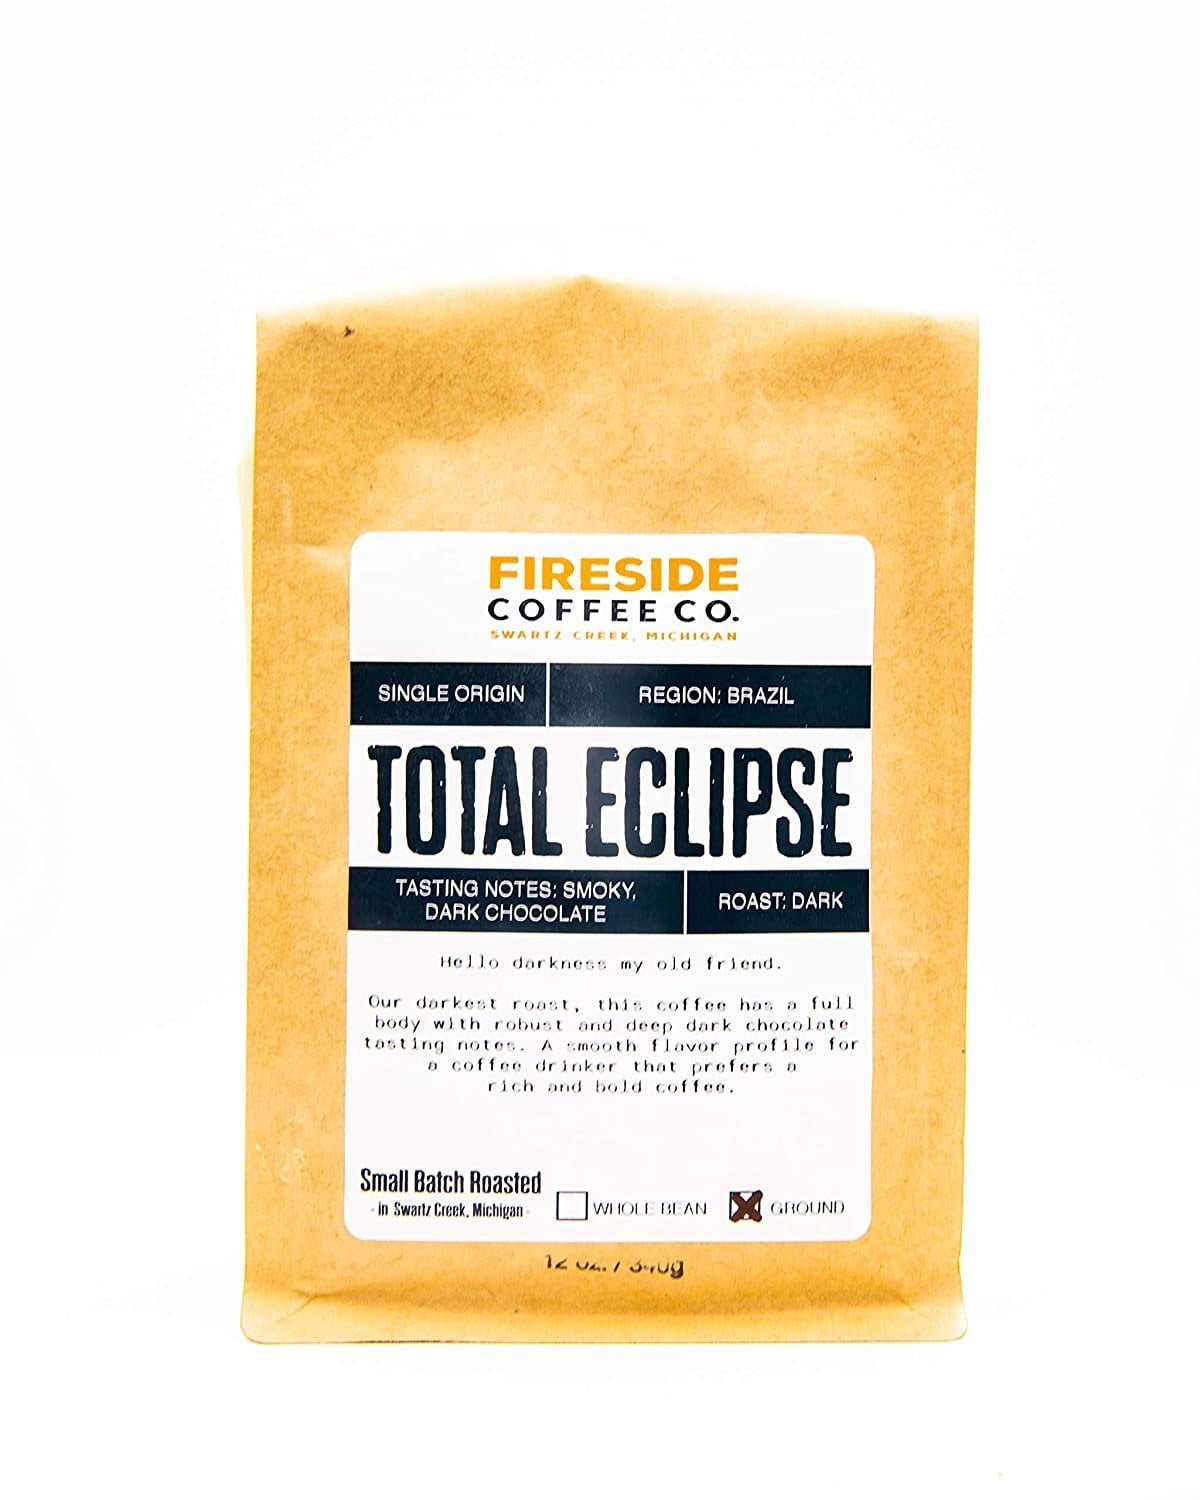 Fireside Coffee Company - Total Eclipse Ground Coffee 12 oz Bag - Farm Direct - Single Origin - Smoky, Dark Chocolate - Roast: Dark - Small Batch Roasted: Ground - Total Eclipse